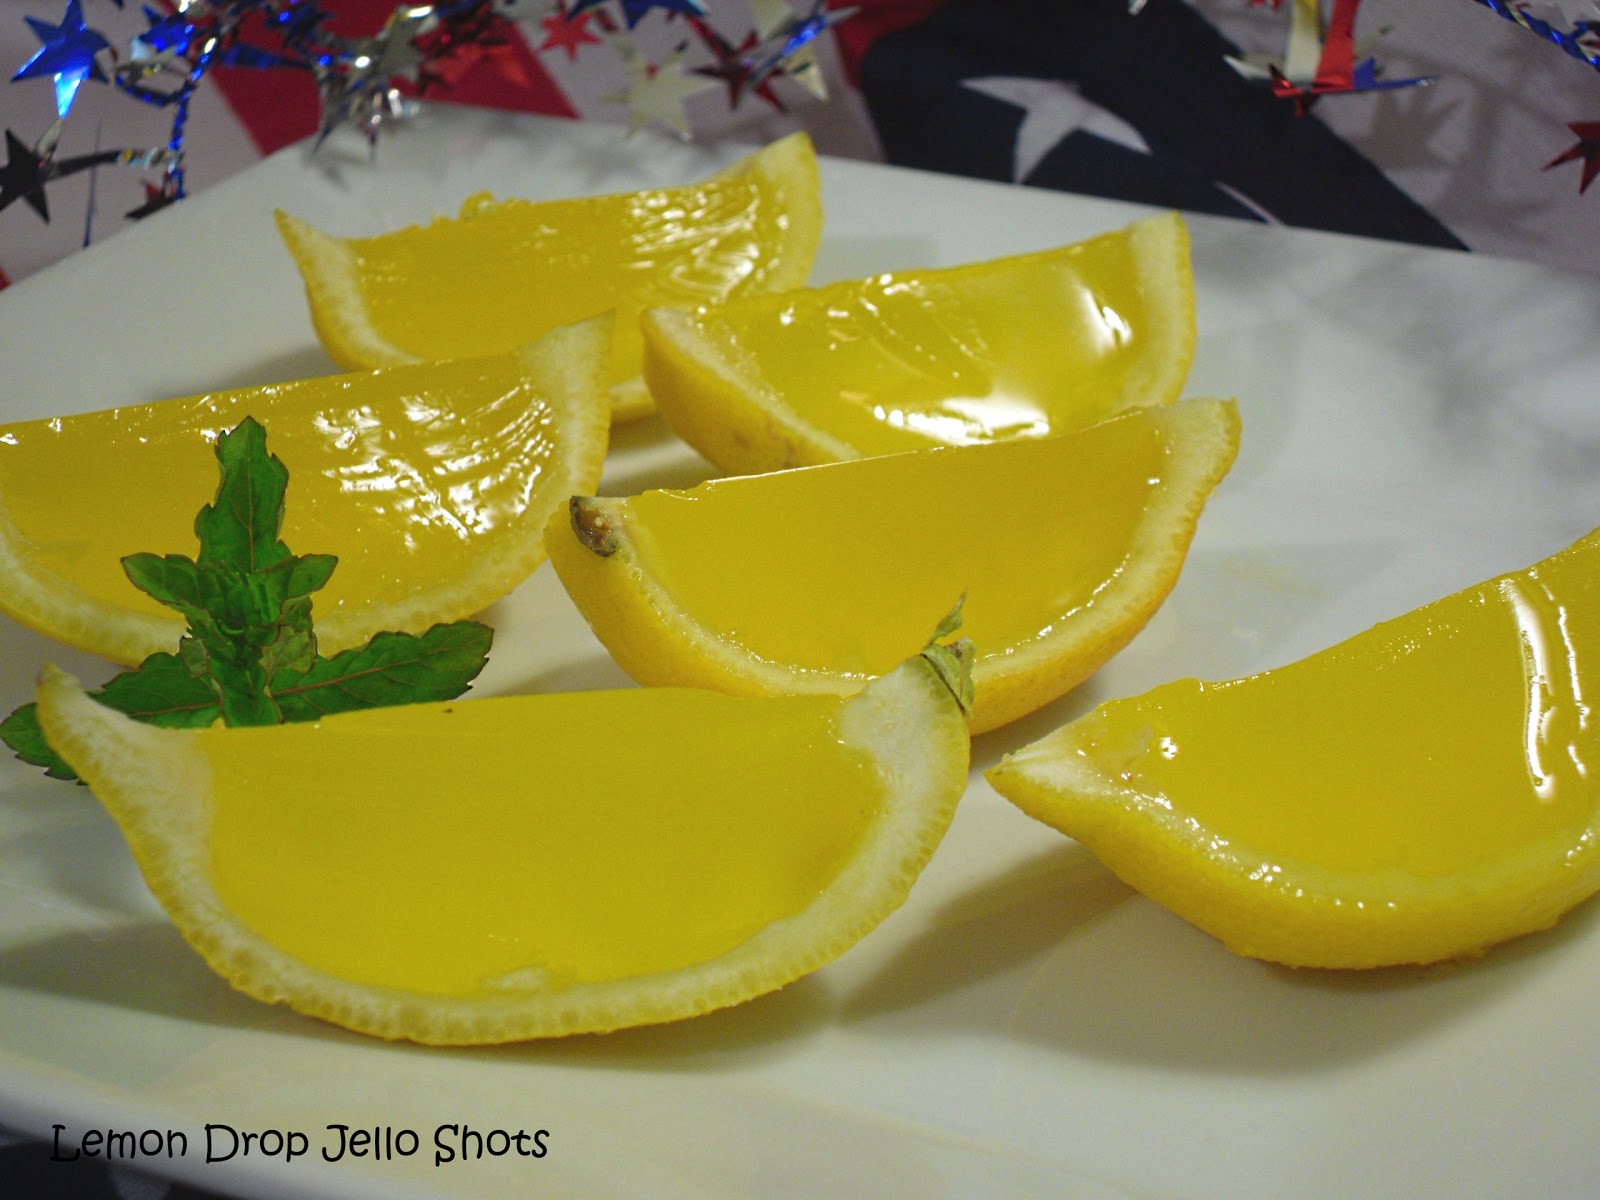 Comfy Cuisine- Home Recipes from Family & Friends: Lemon Drop Jello Shots